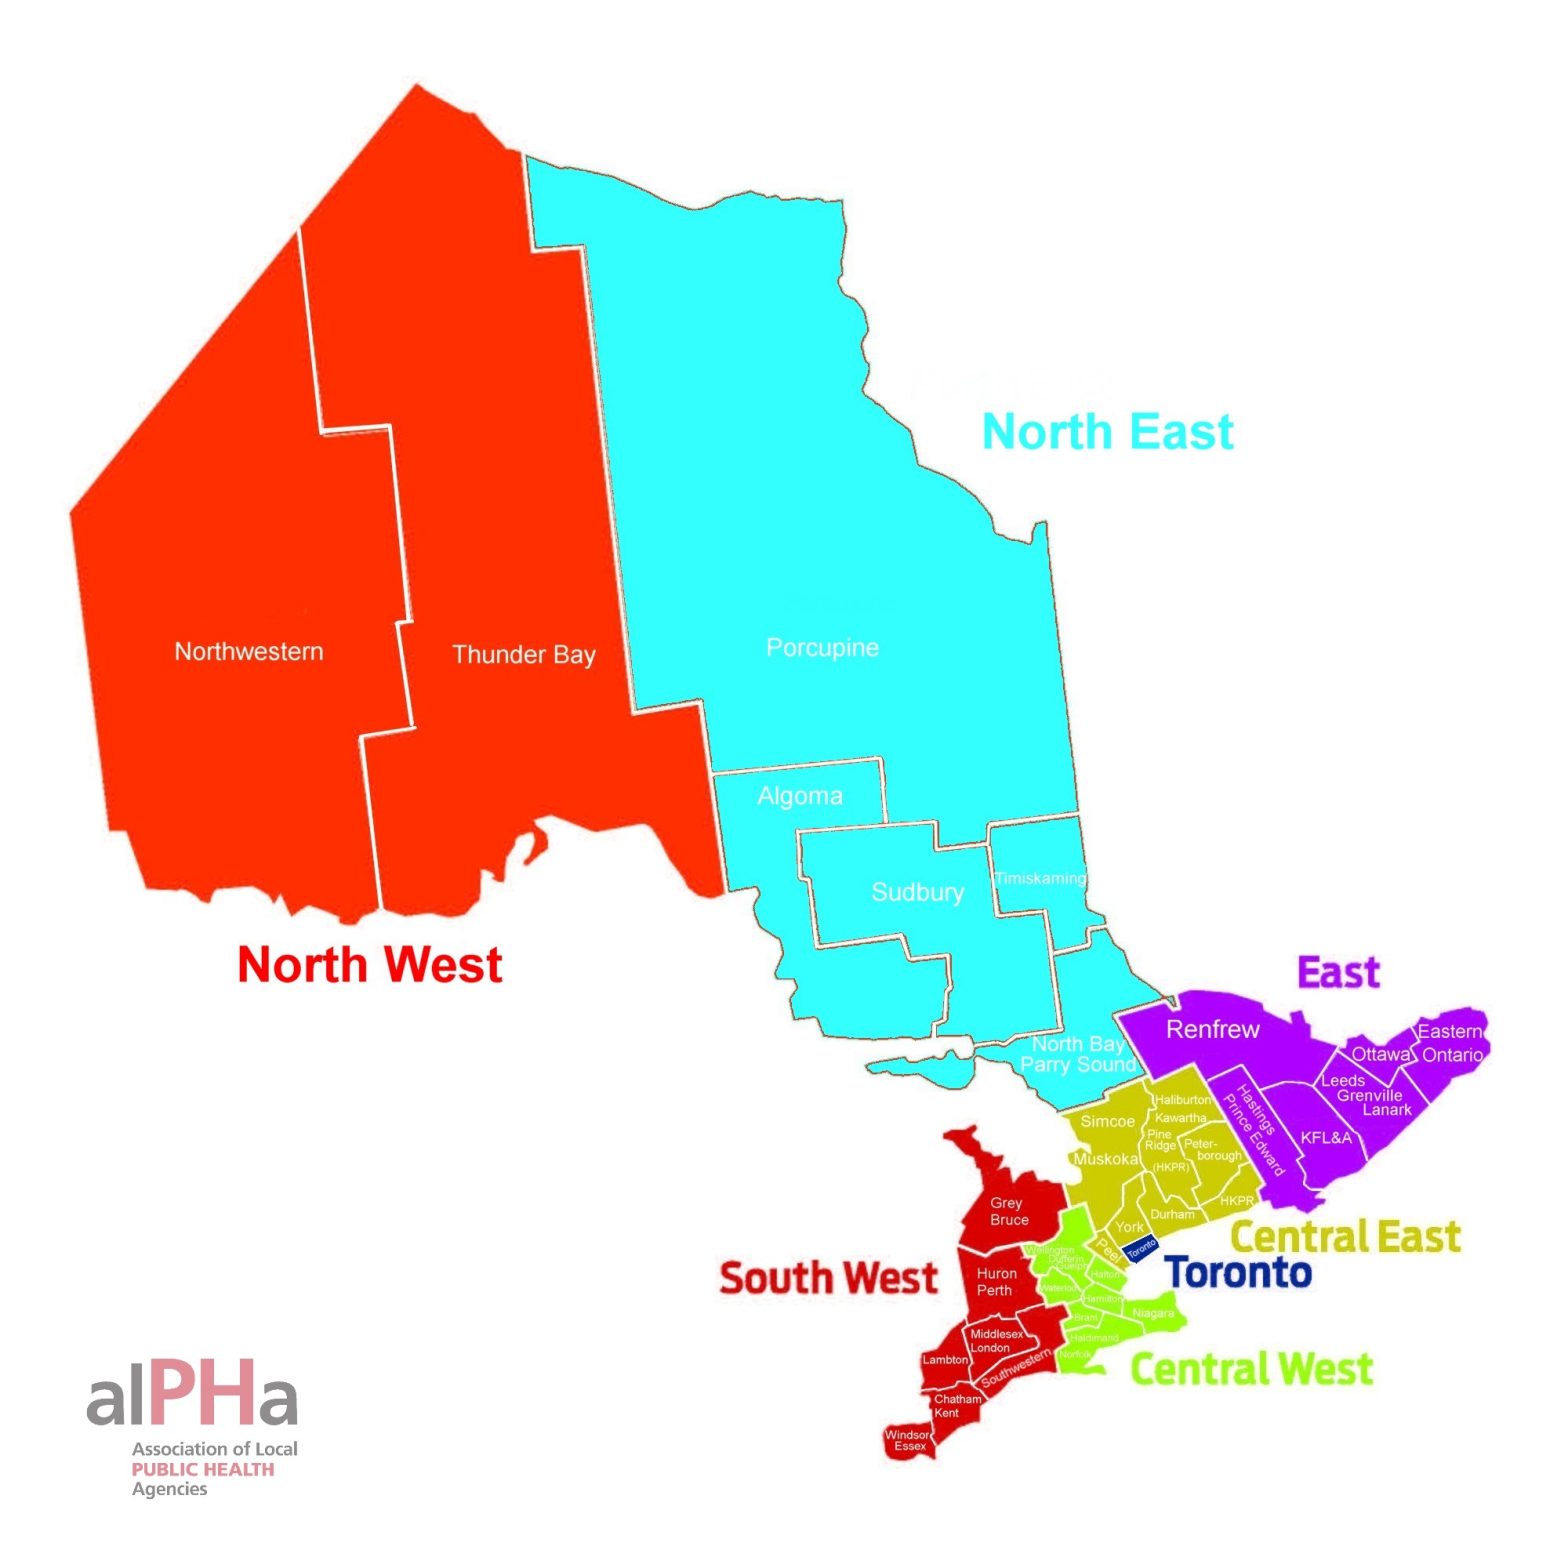 Ontario's Public Health Units within Health Regions